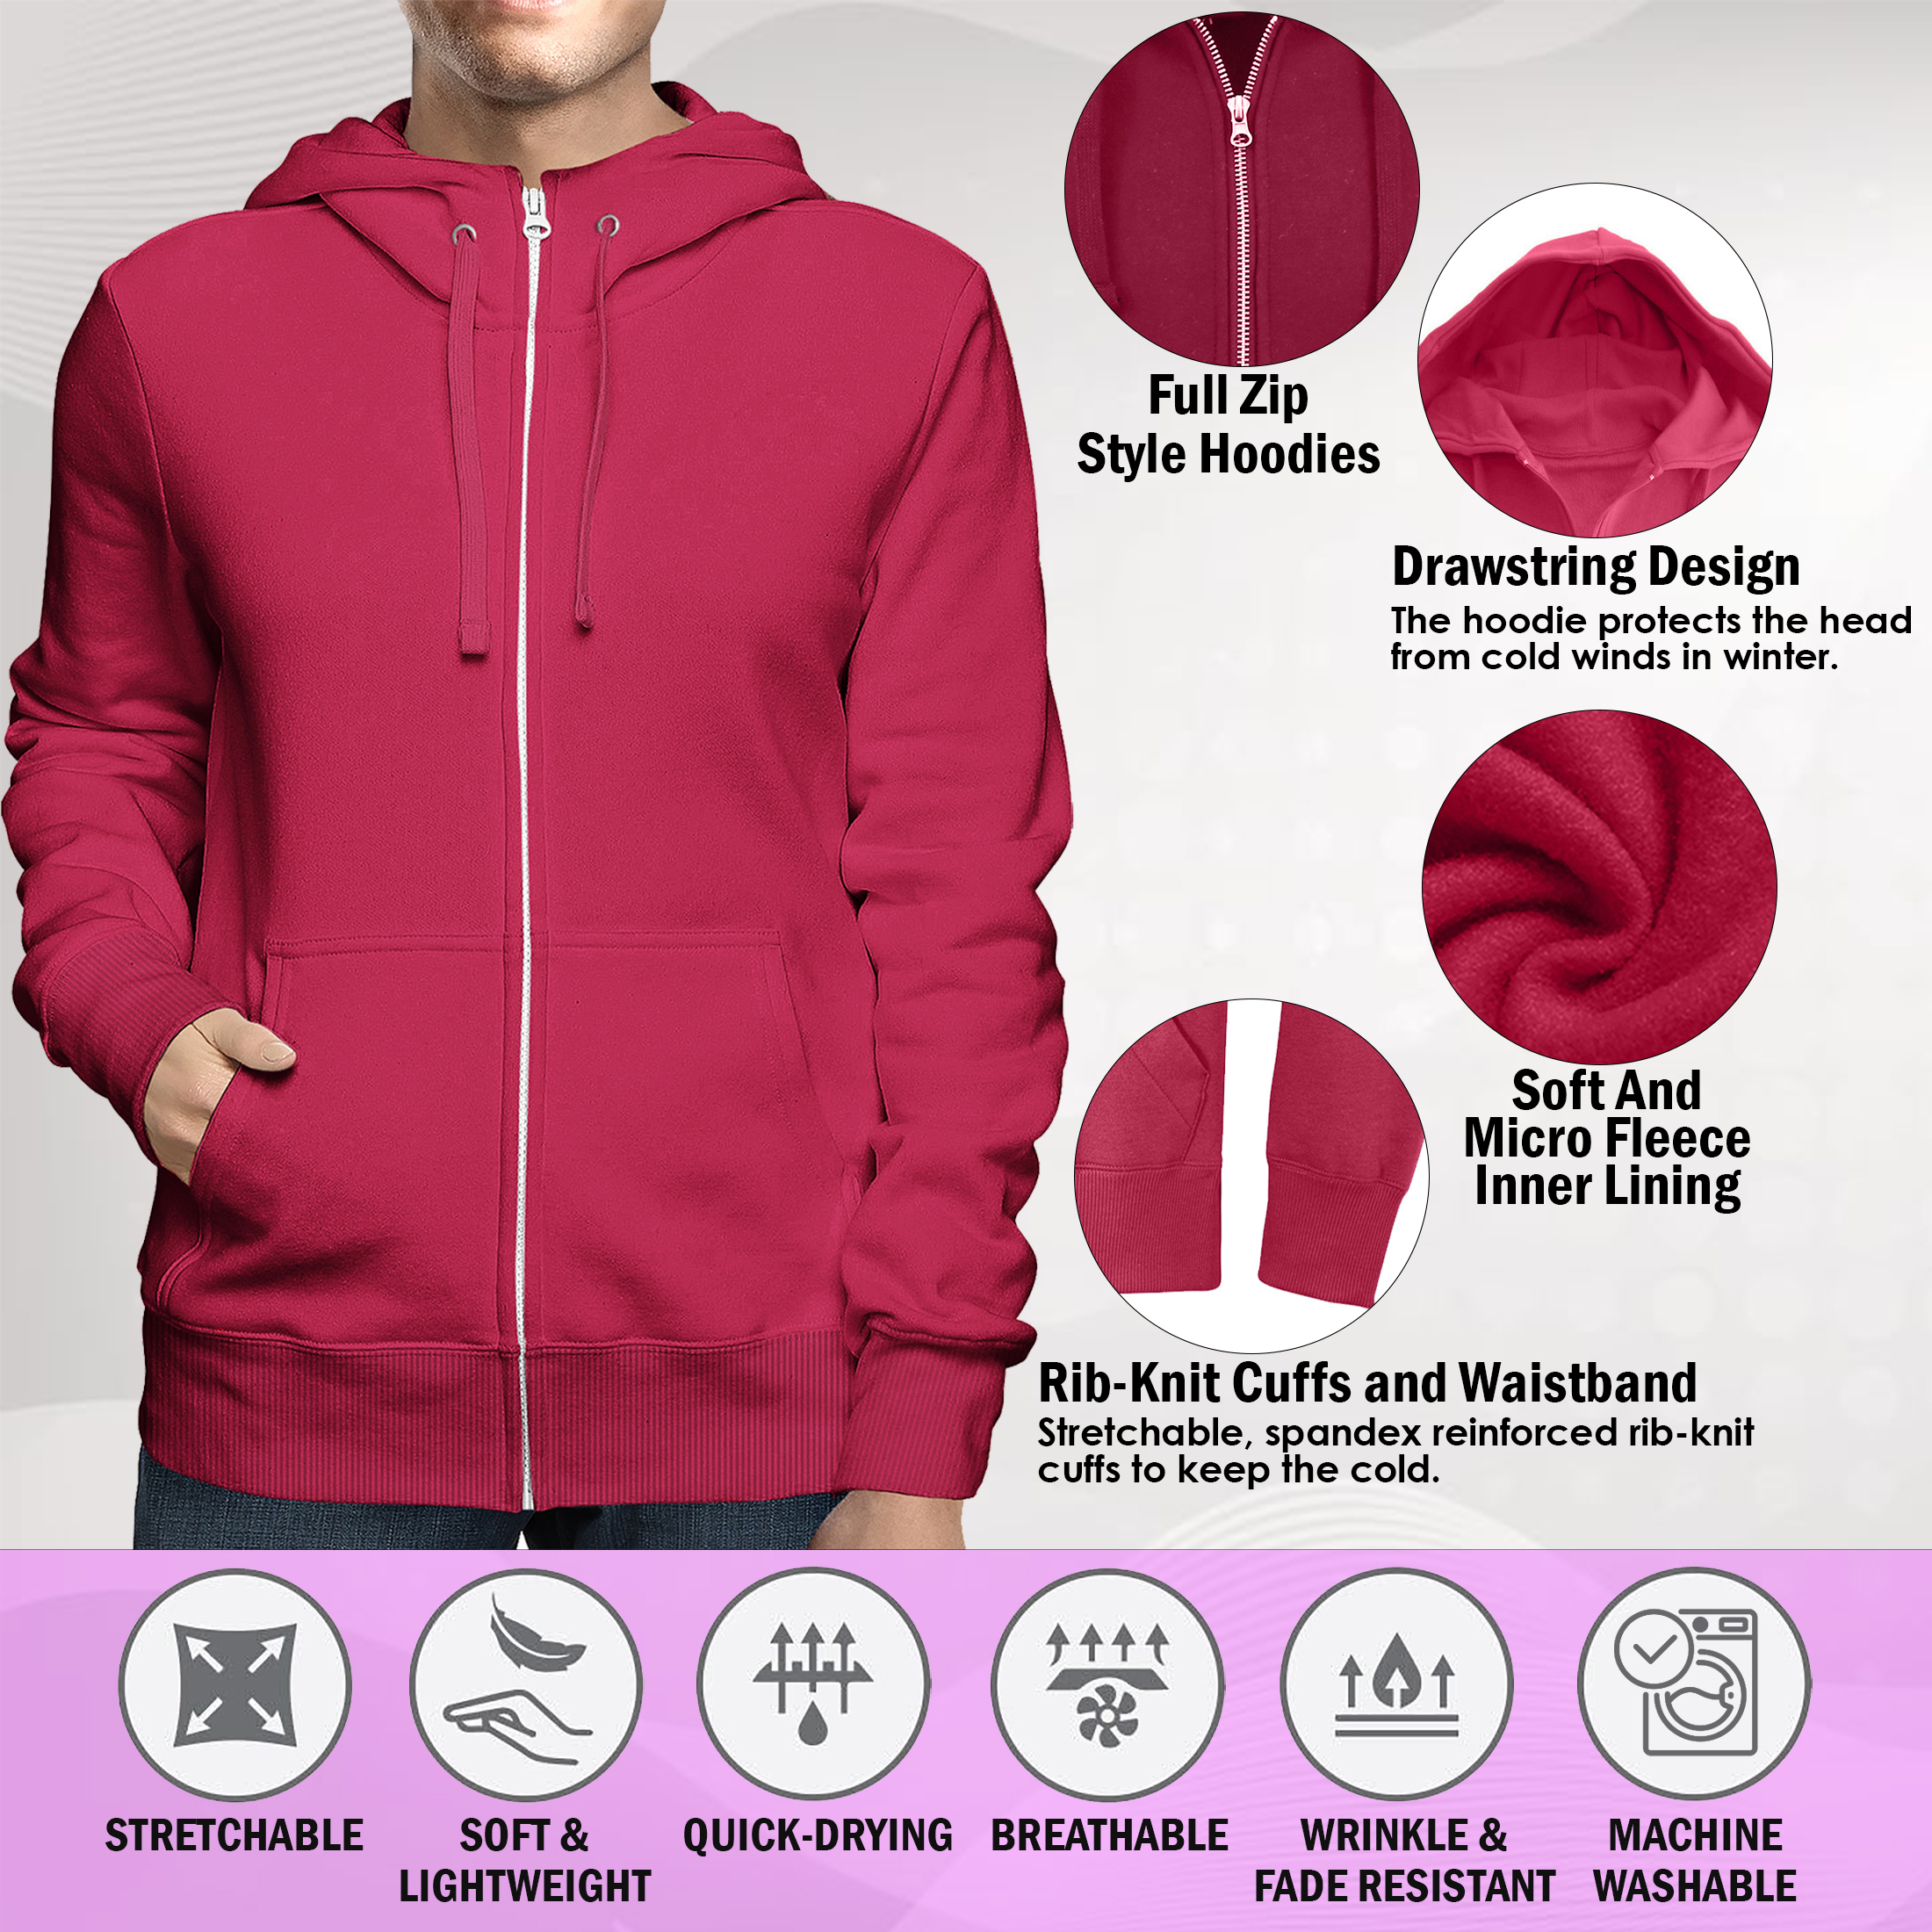 2-Pack: Men's Full Zip Up Fleece-Lined Hoodie Sweatshirt (Big & Tall Size Available) - Burgundy & Timberland, Medium